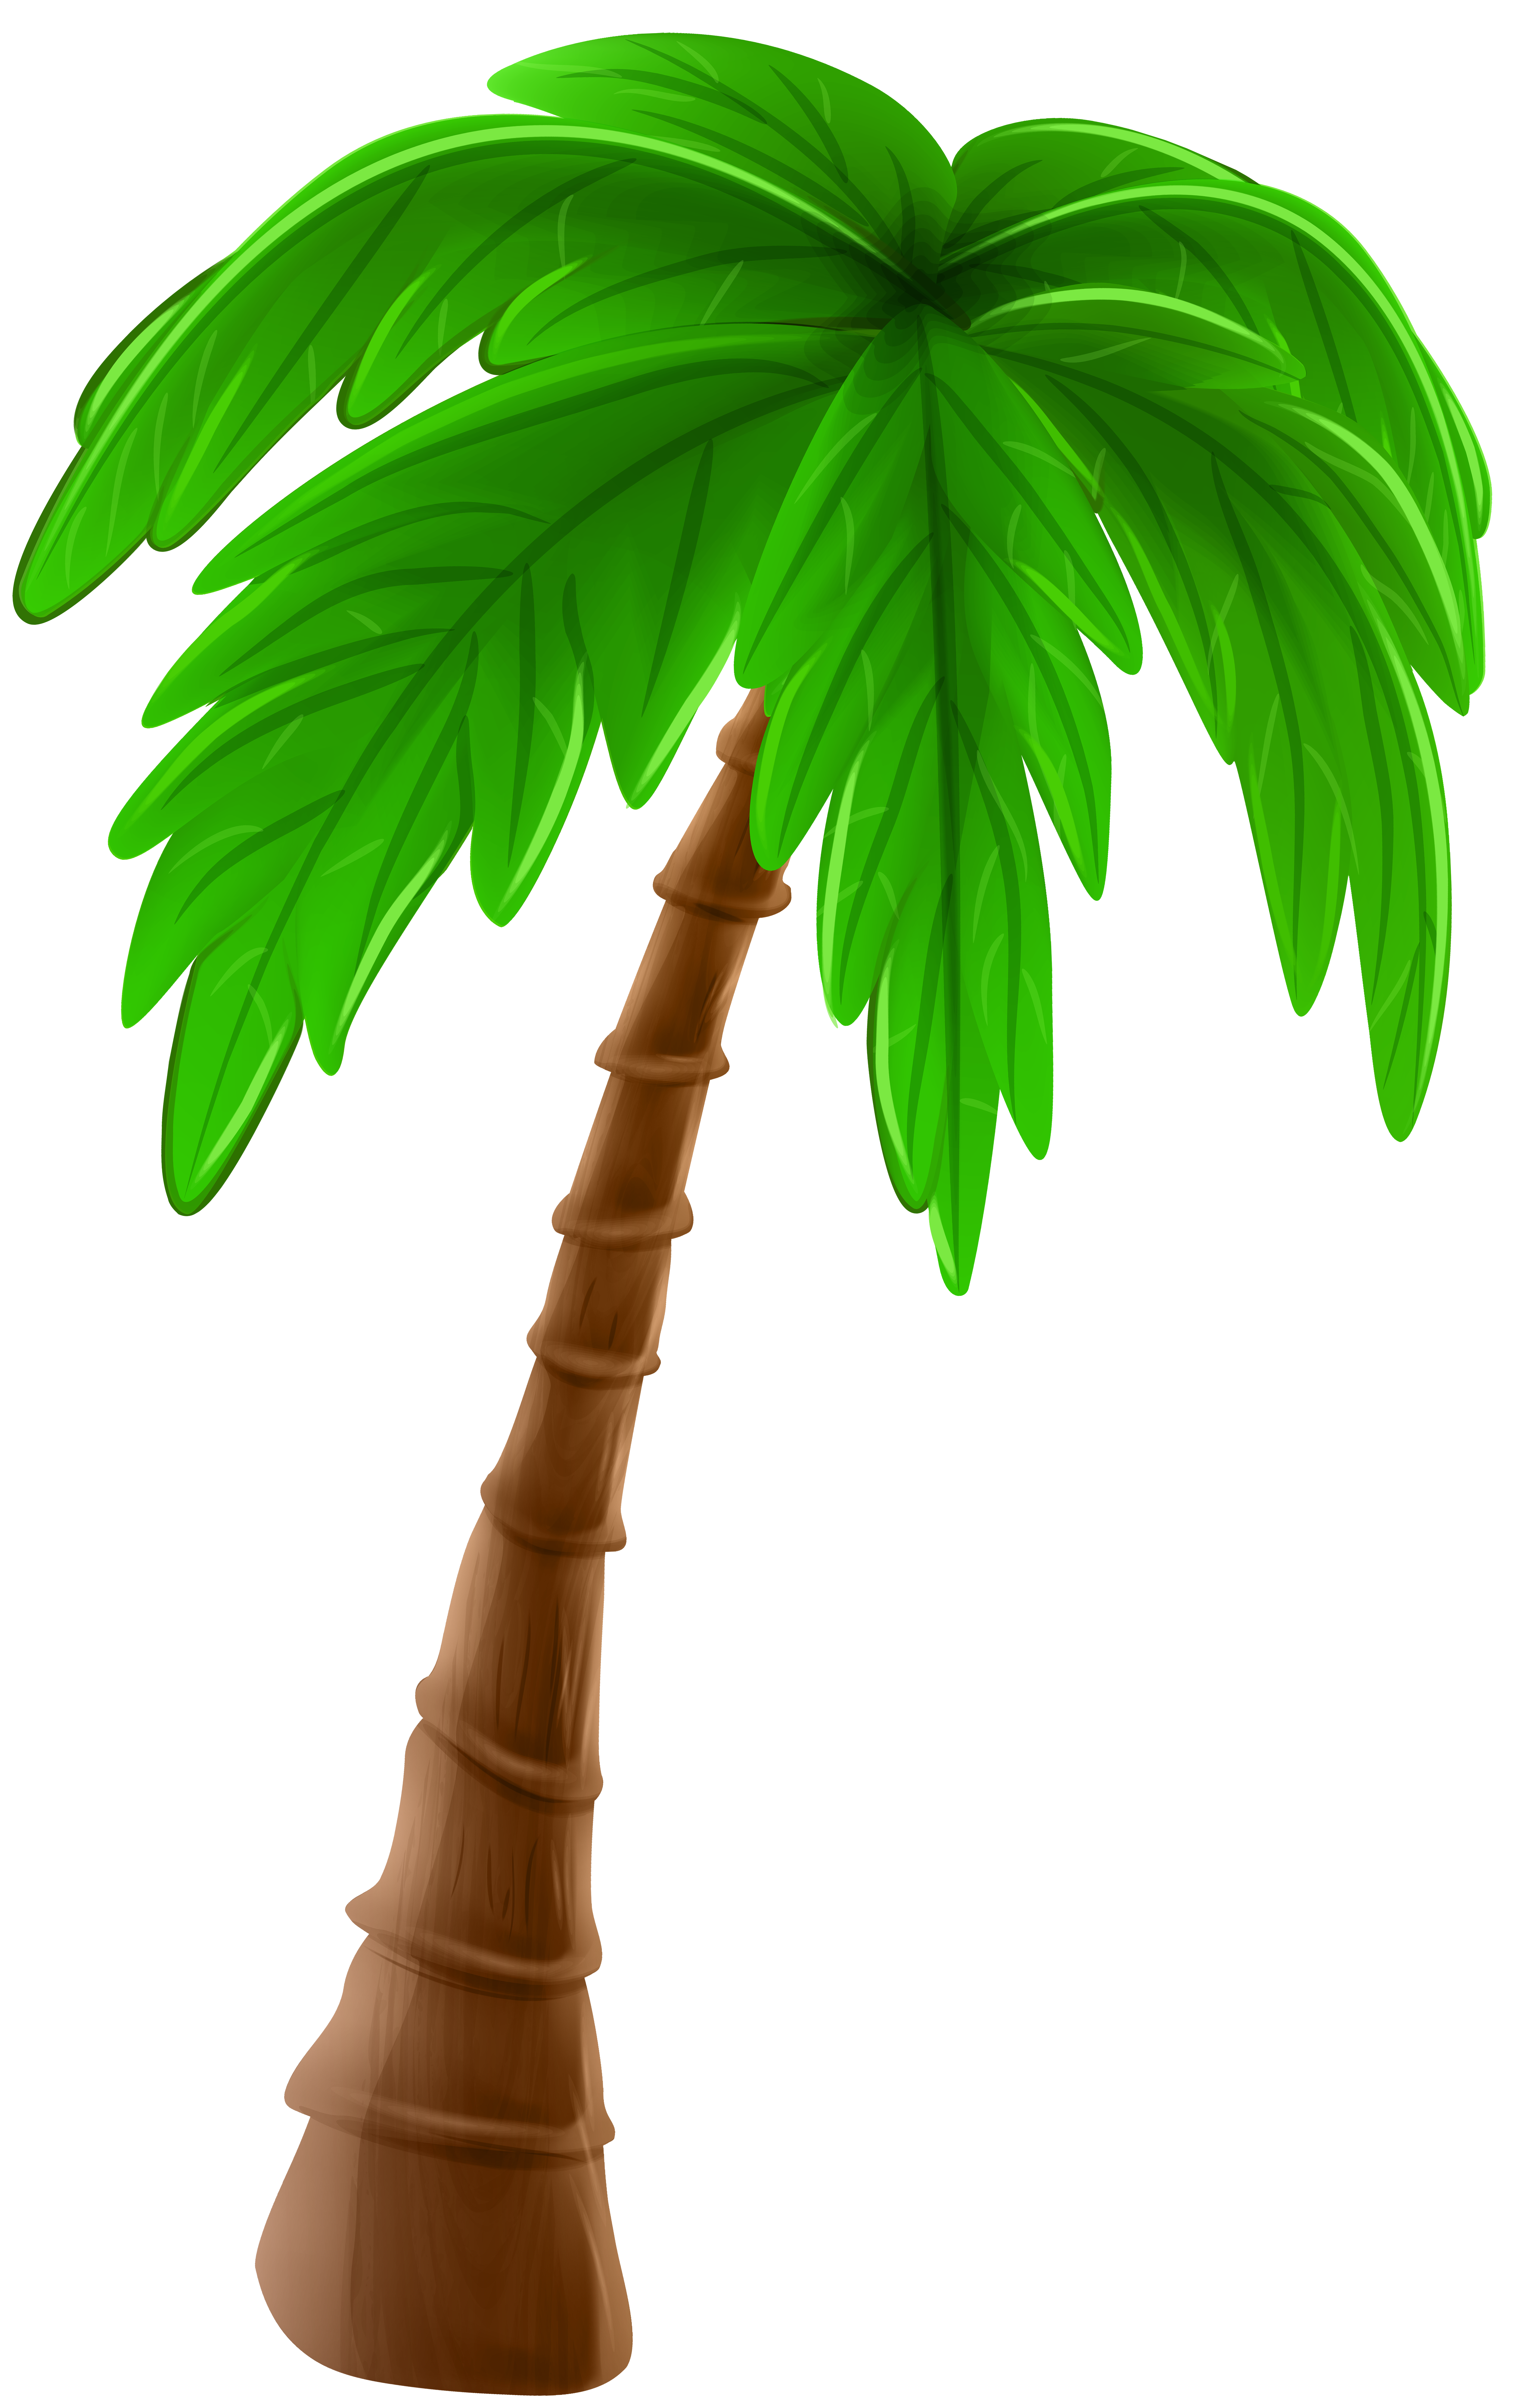 Palm tree photo